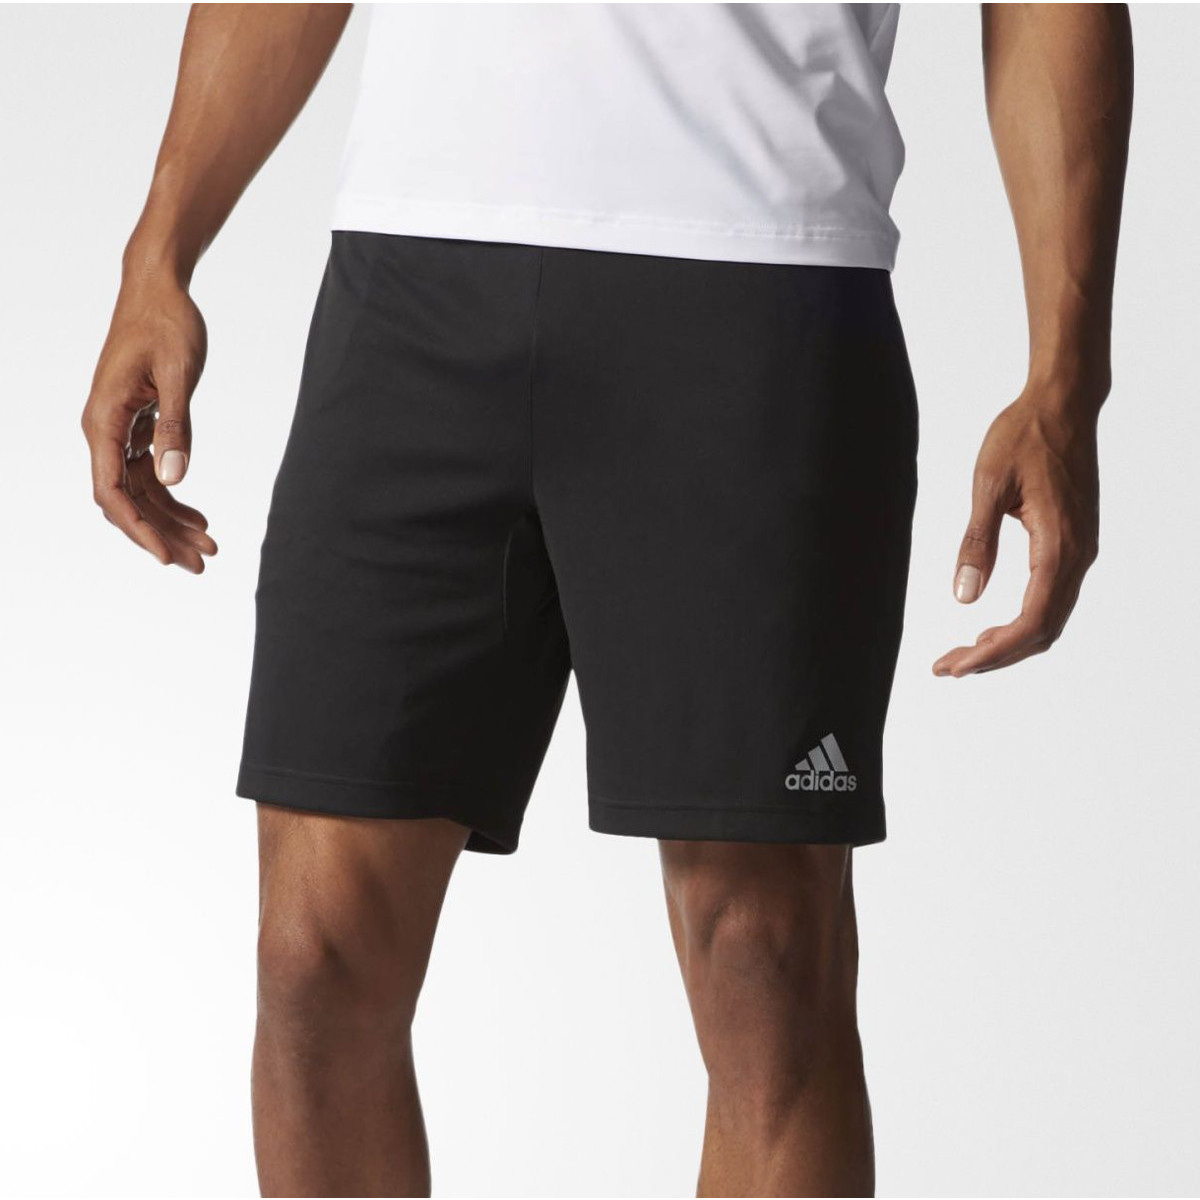 Adidas Men's Black Bar Climacool Training Shorts Black Sports Gym Large